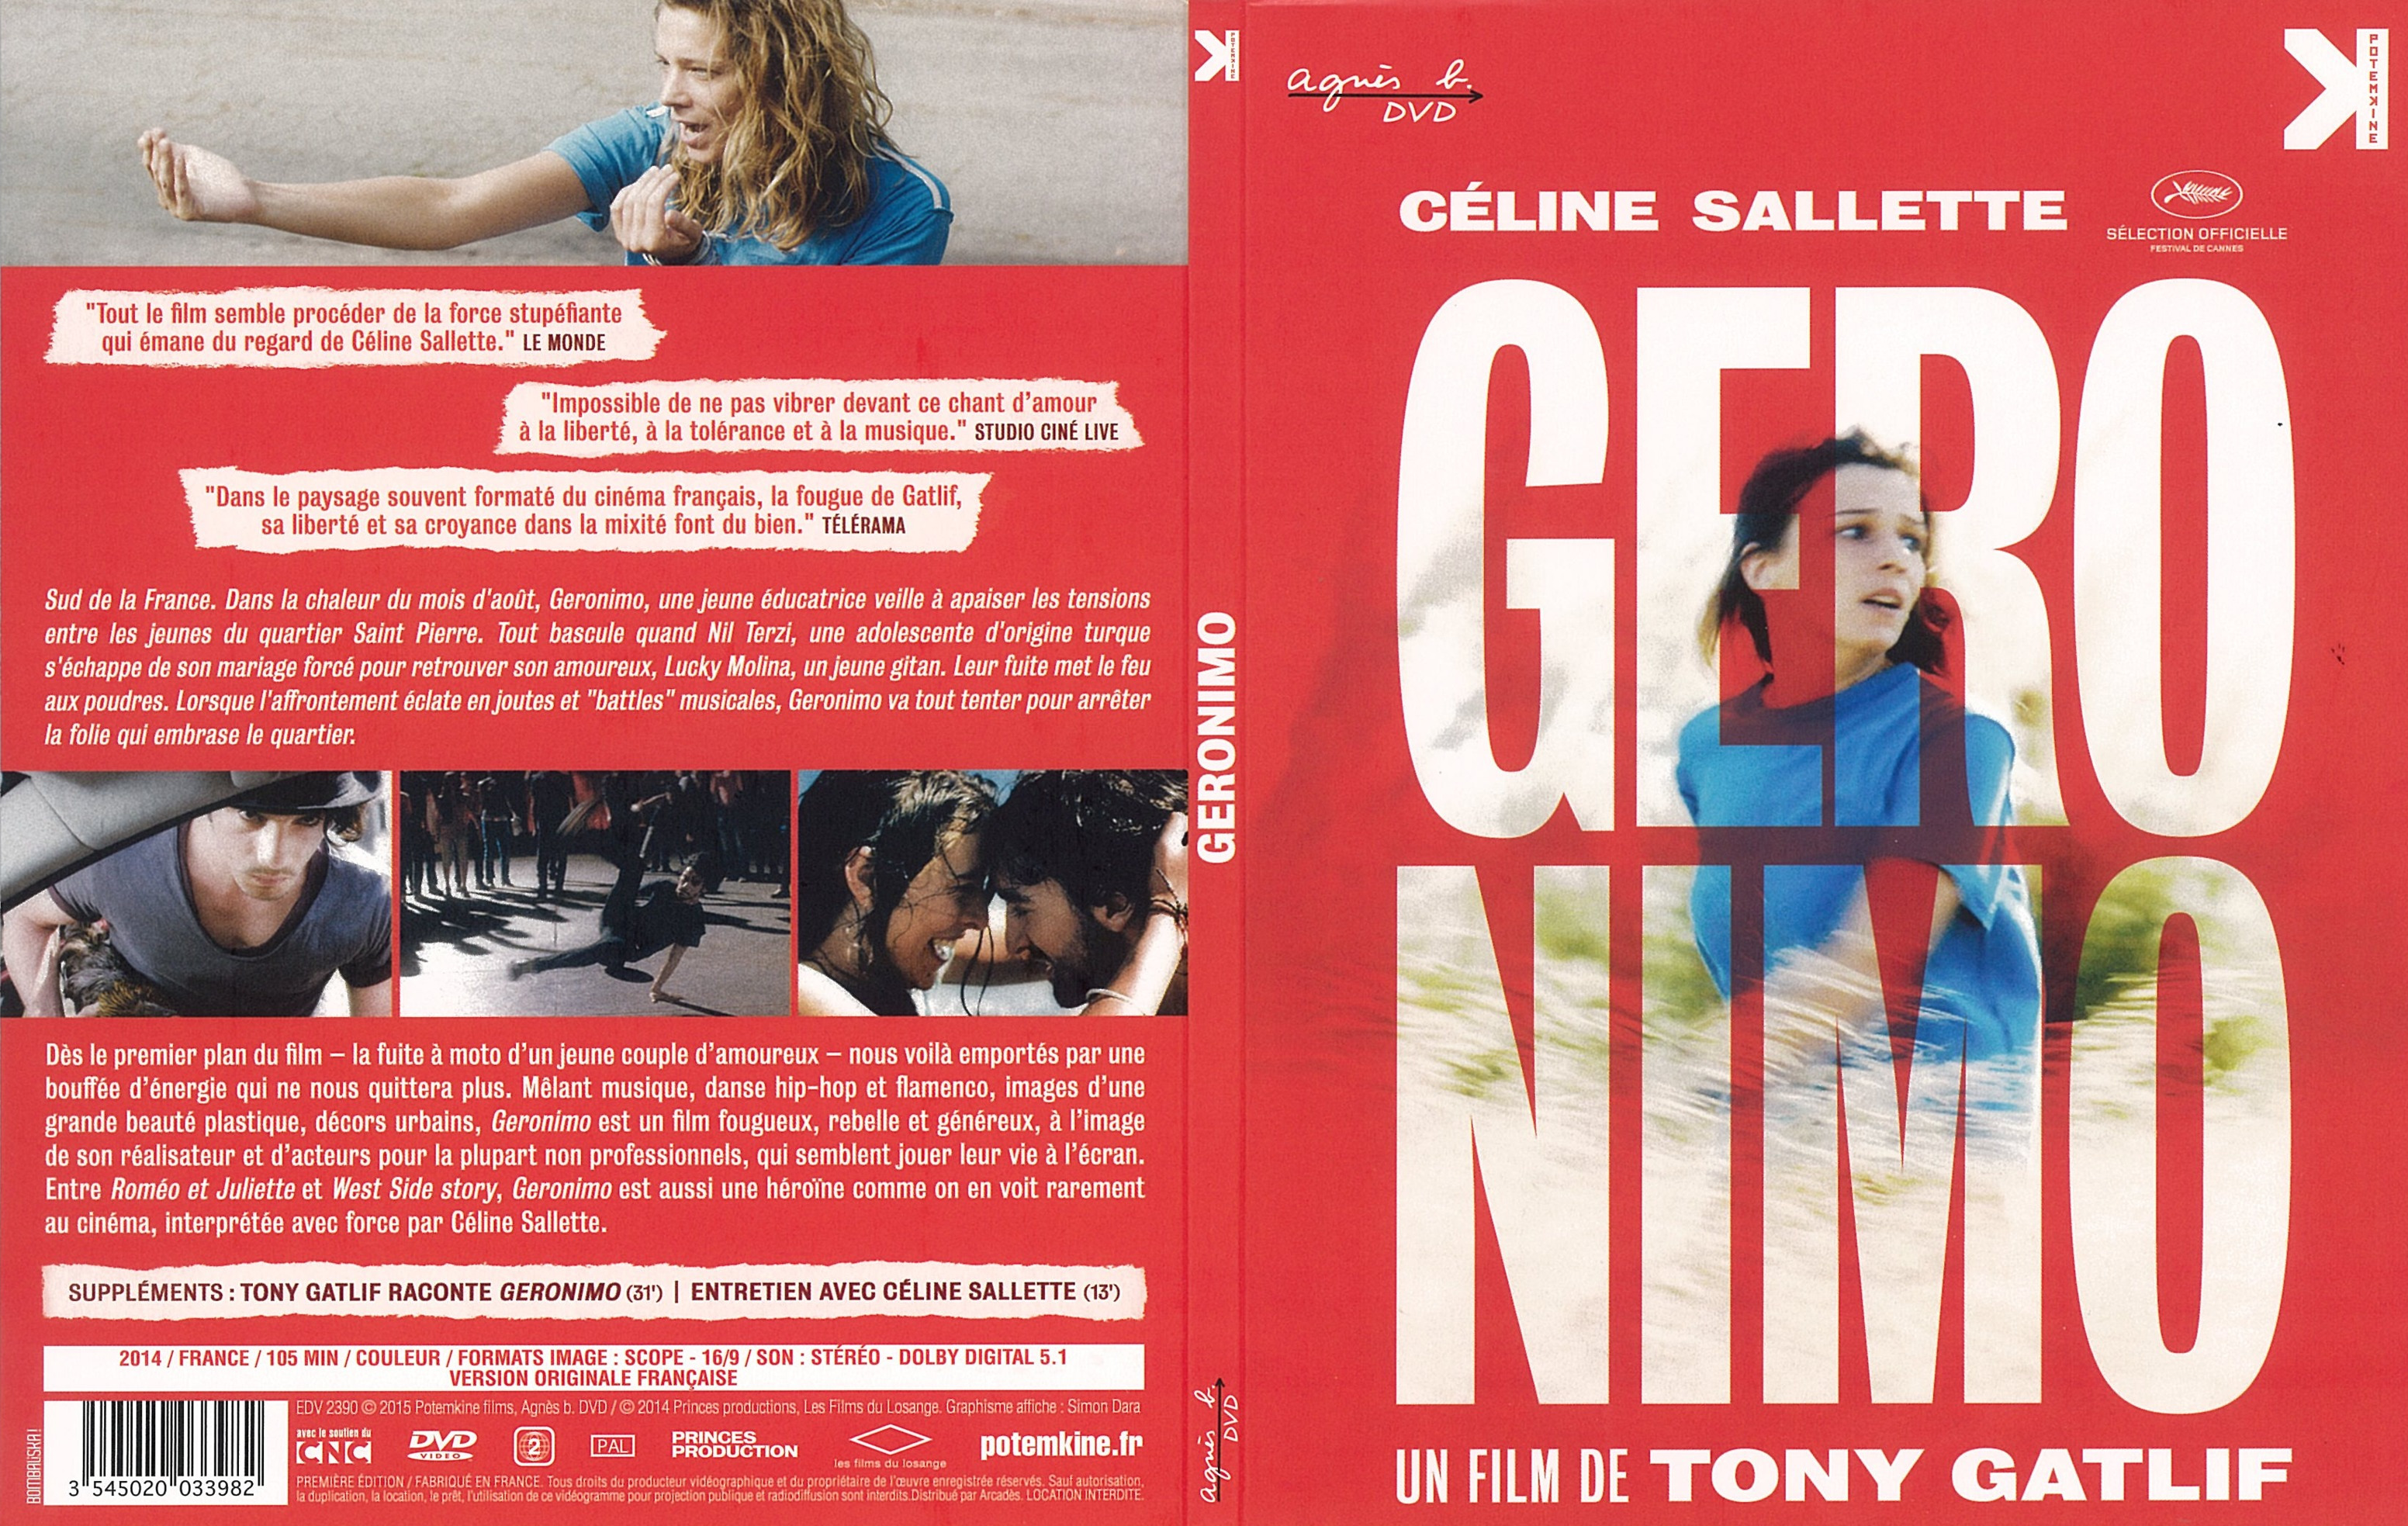 Jaquette DVD Geronimo (2014)